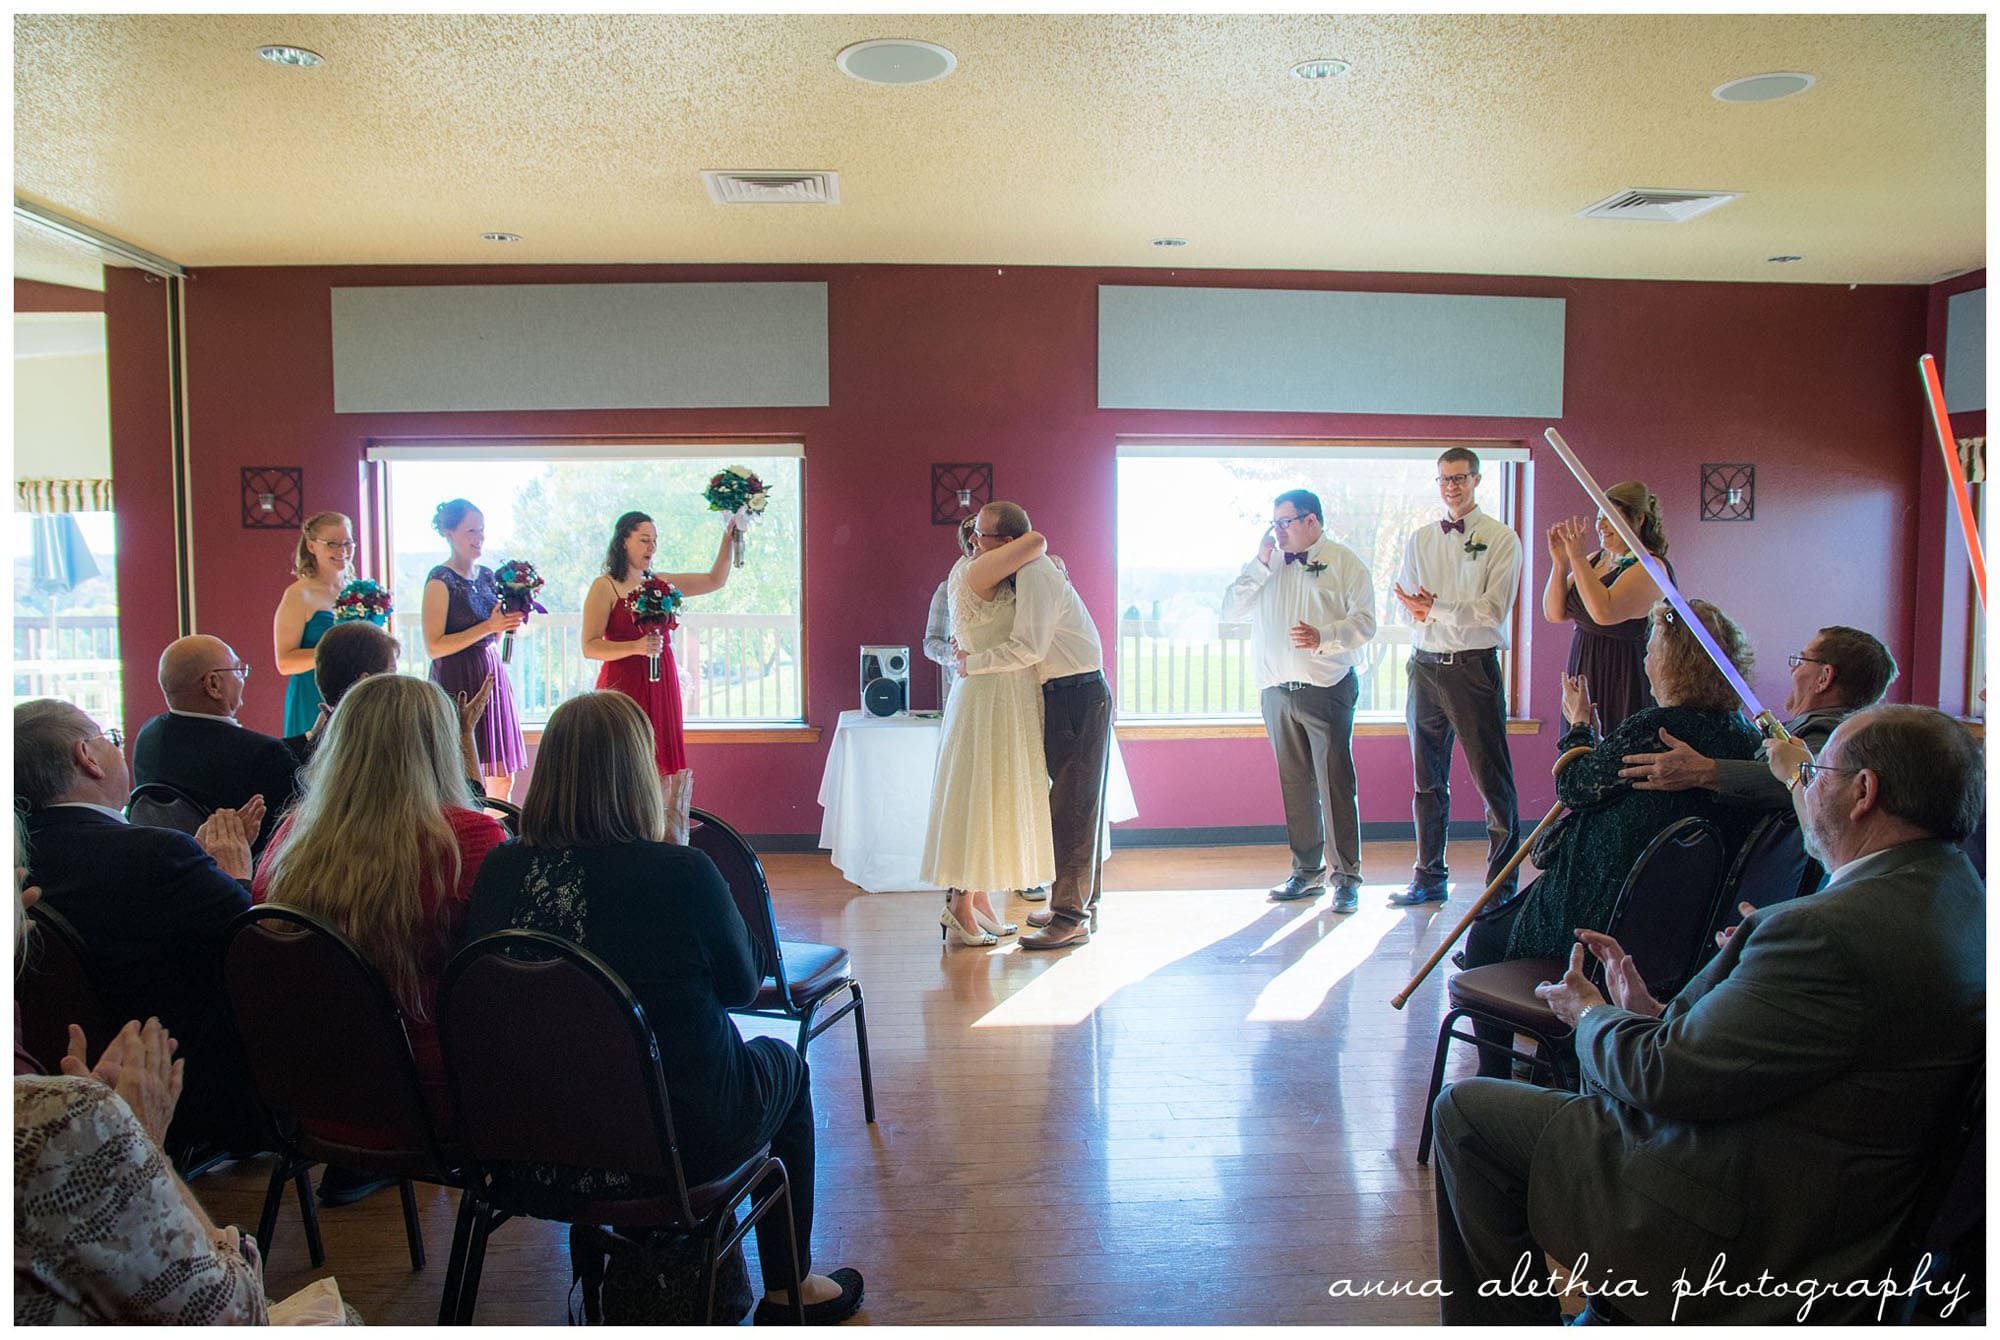 Star Wars Themed Wedding photos in Mayville WI